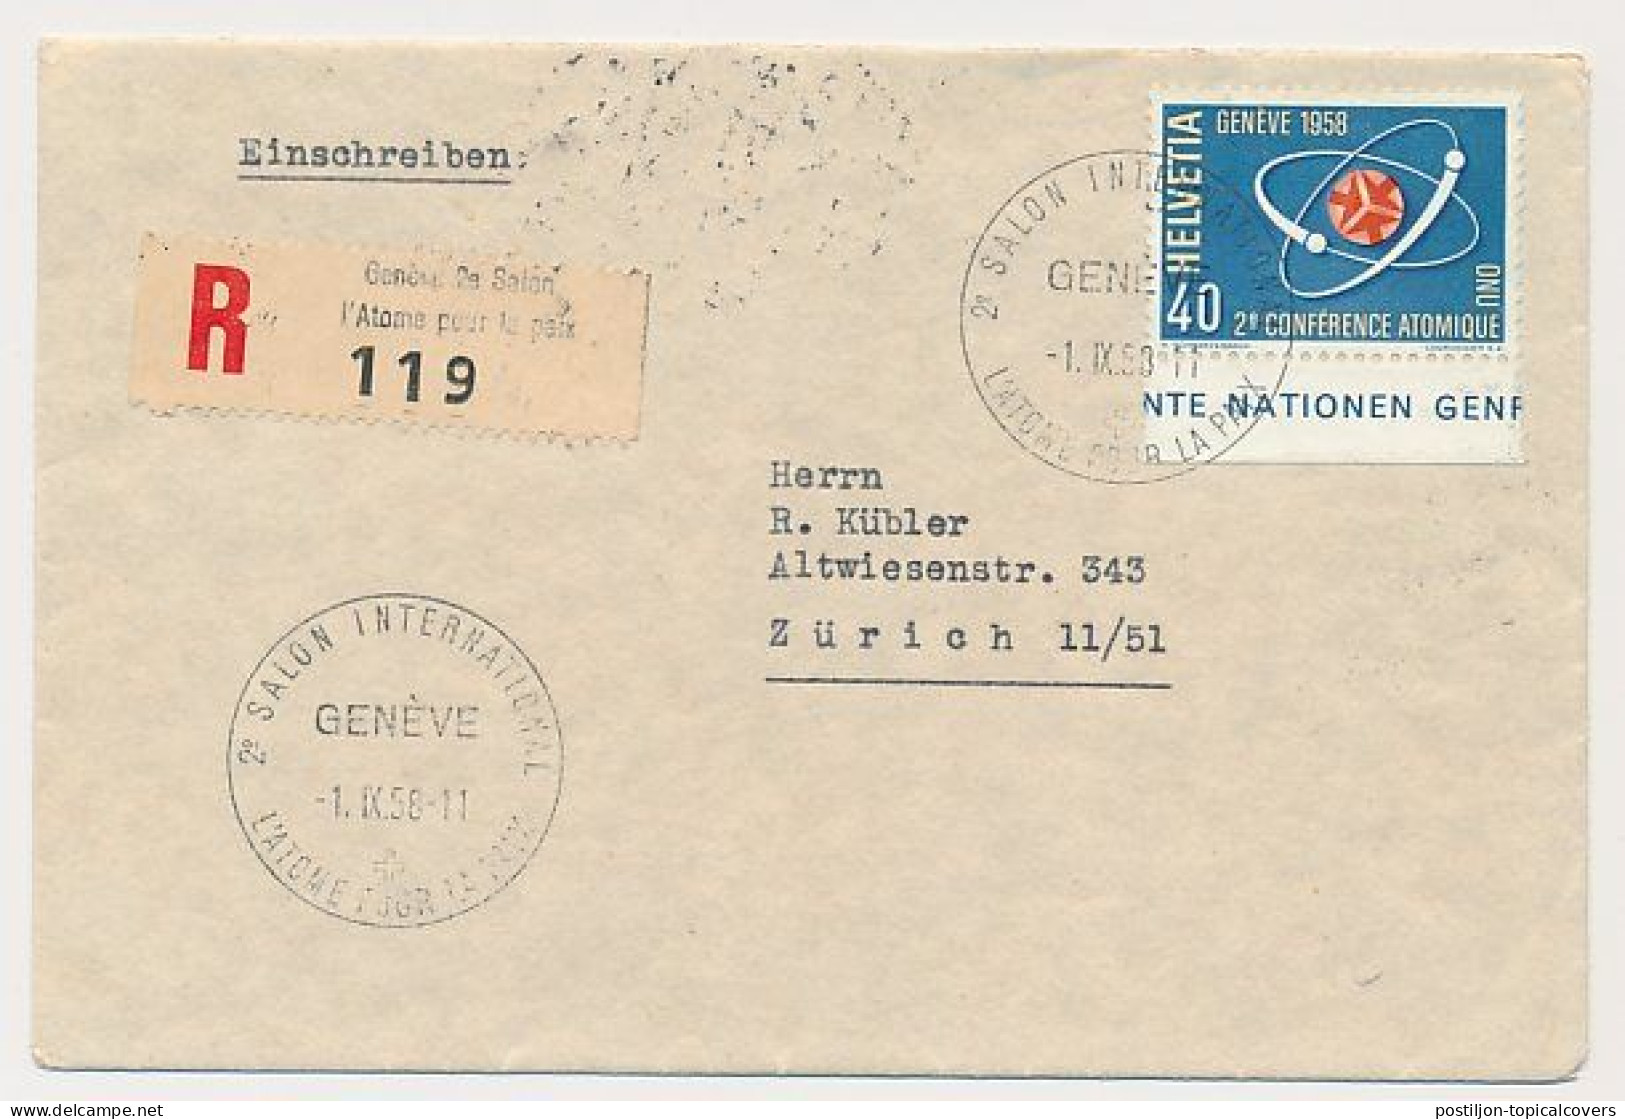 Registered Cover Geneve Switzerland 1958 - L'Atome  Pour La Paix - The Atom For Peace - Atomenergie